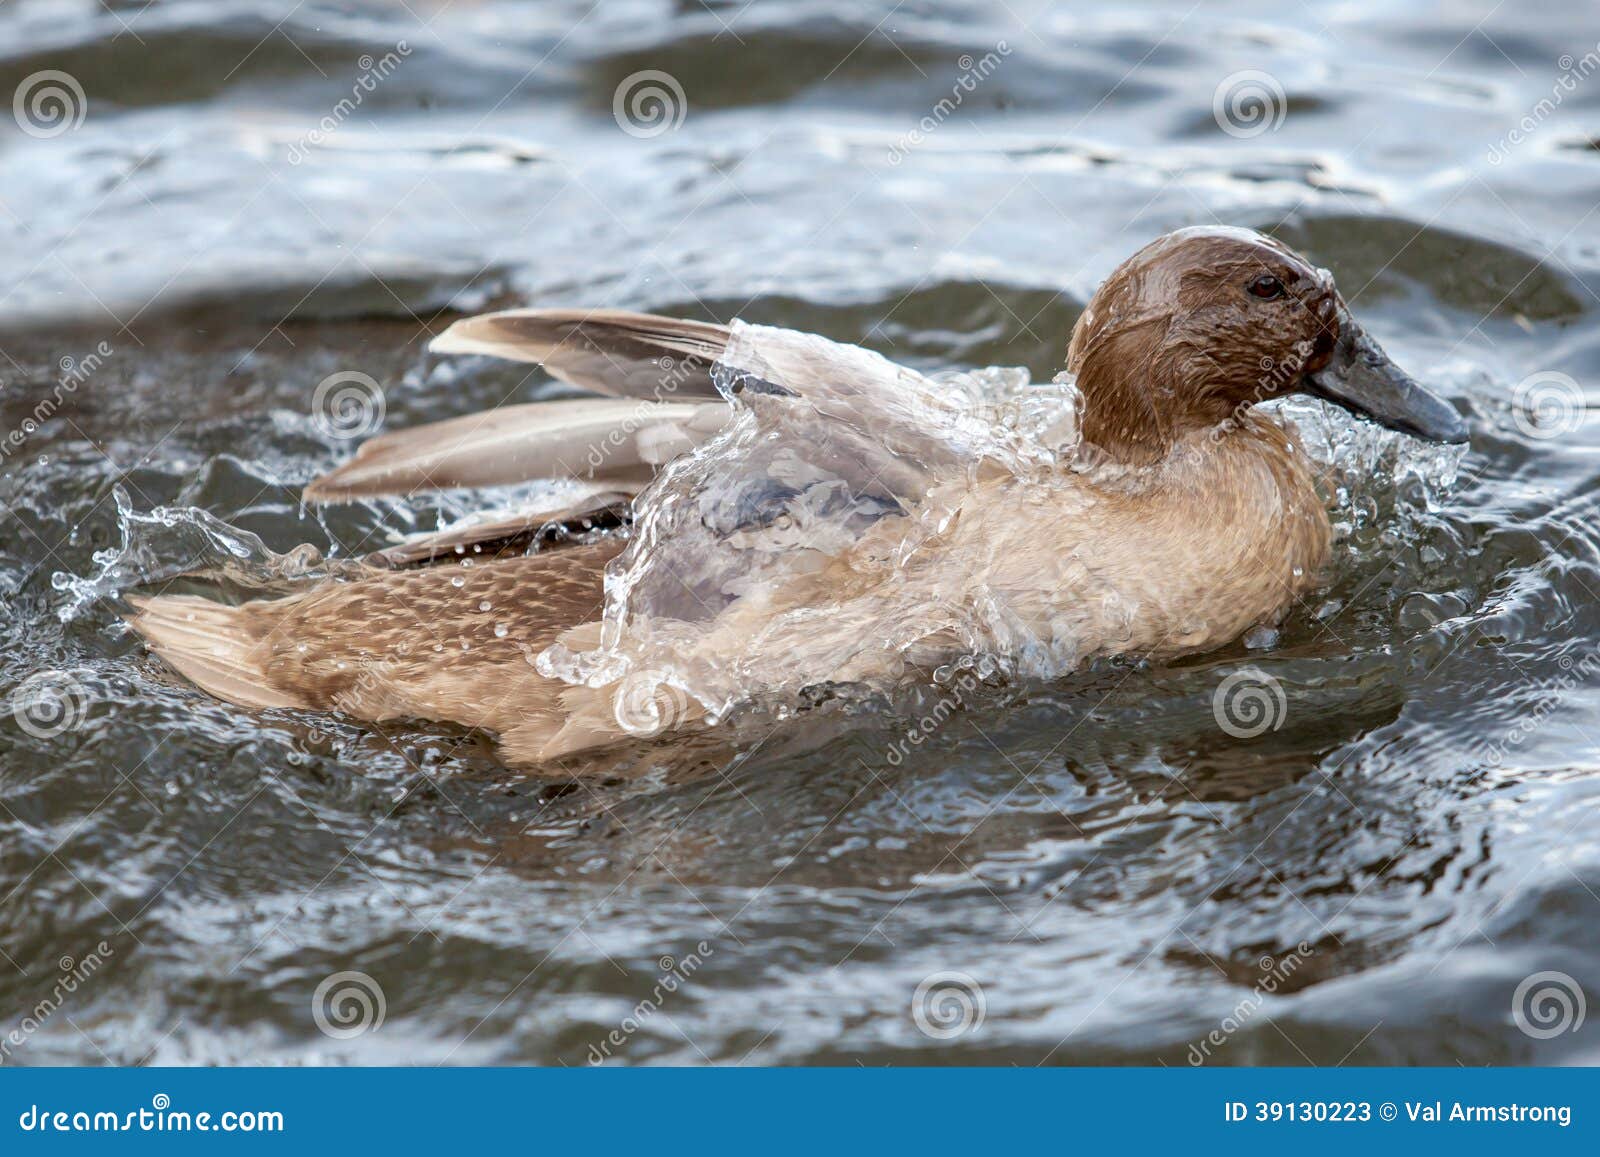 khaki campbell duck swimming